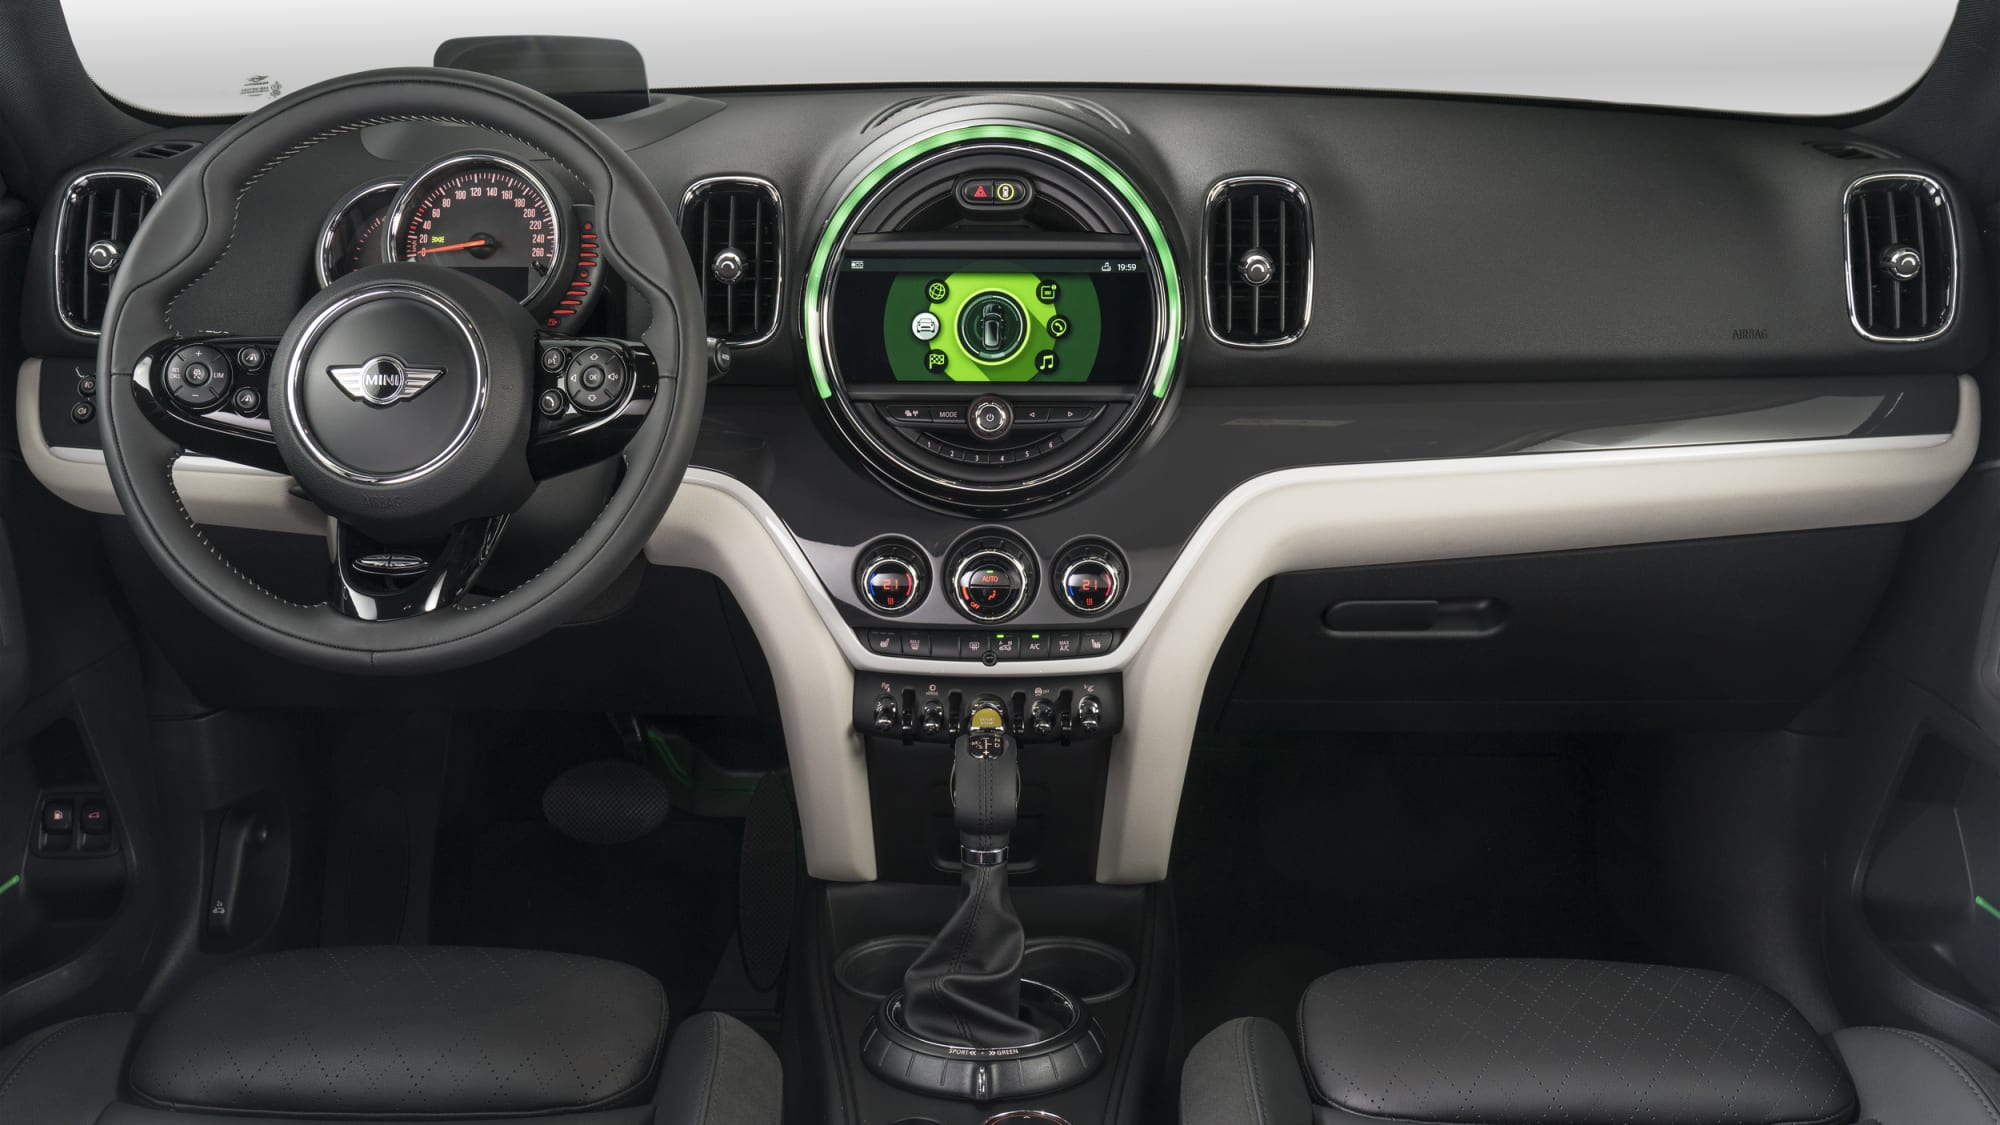 2019 Mini E Countryman Plug-in Hybrid Review | Fuel economy, electric  range, pricing - Autoblog